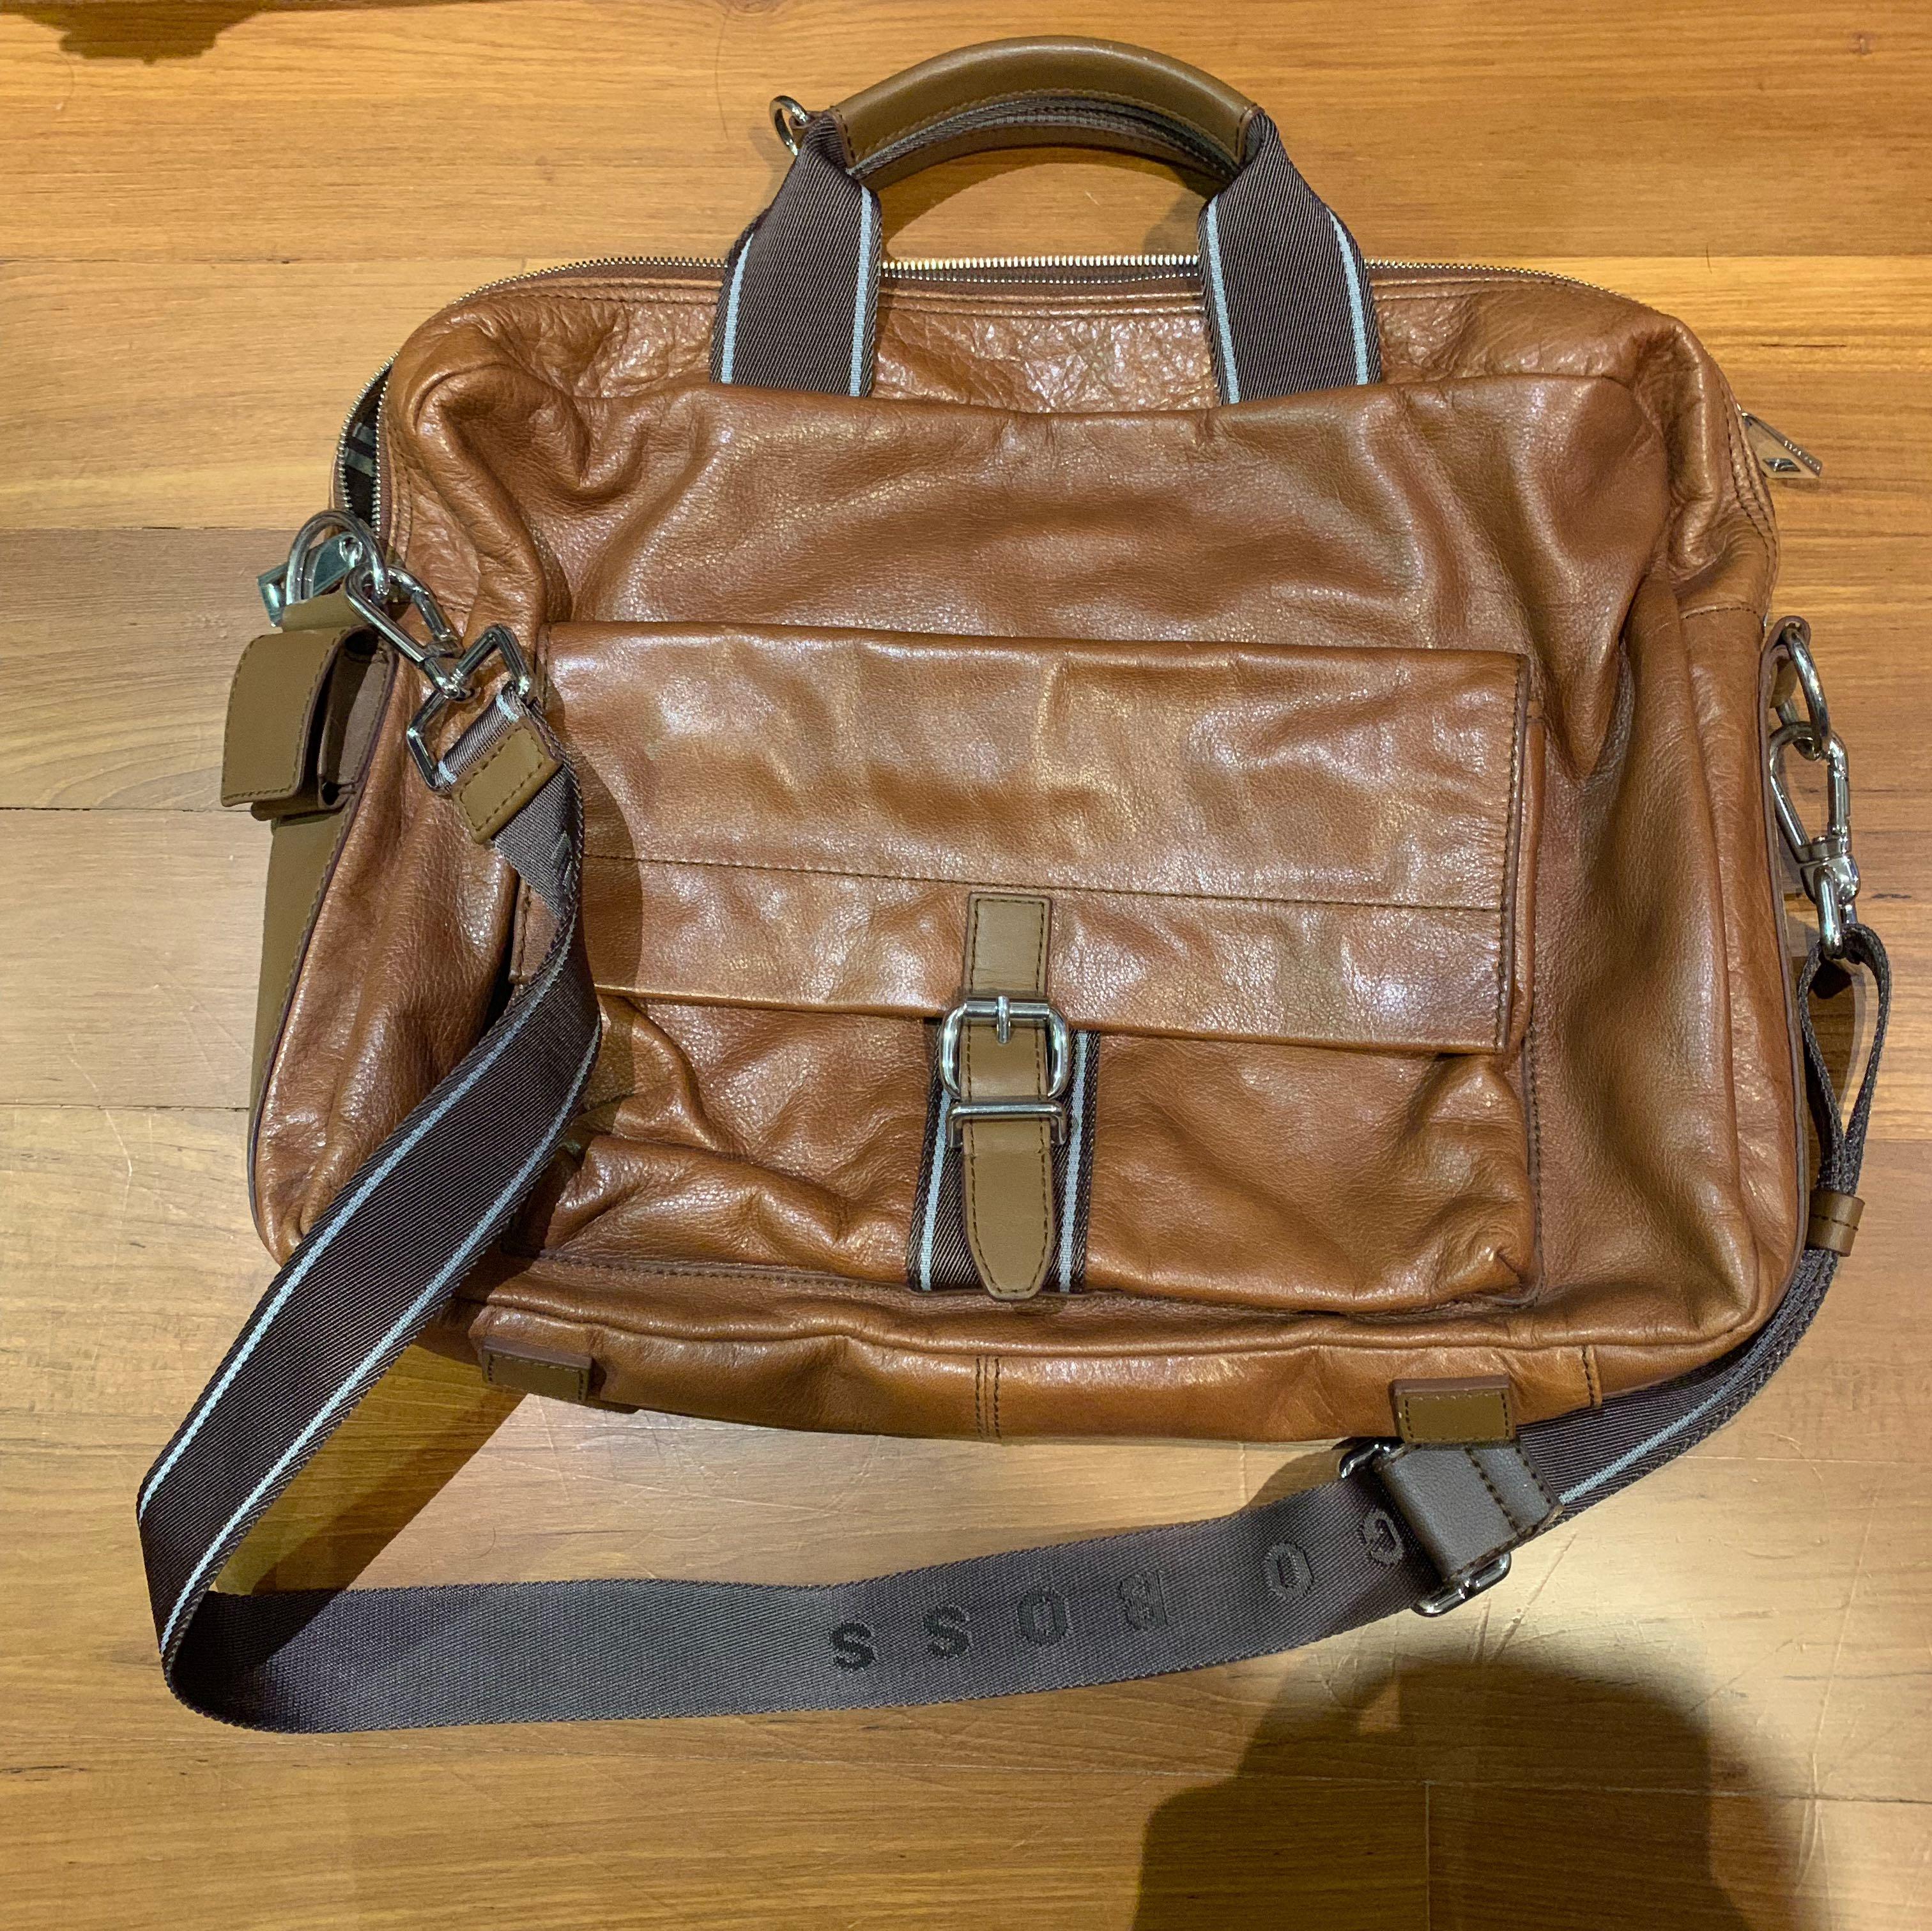 hugo boss satchel bag